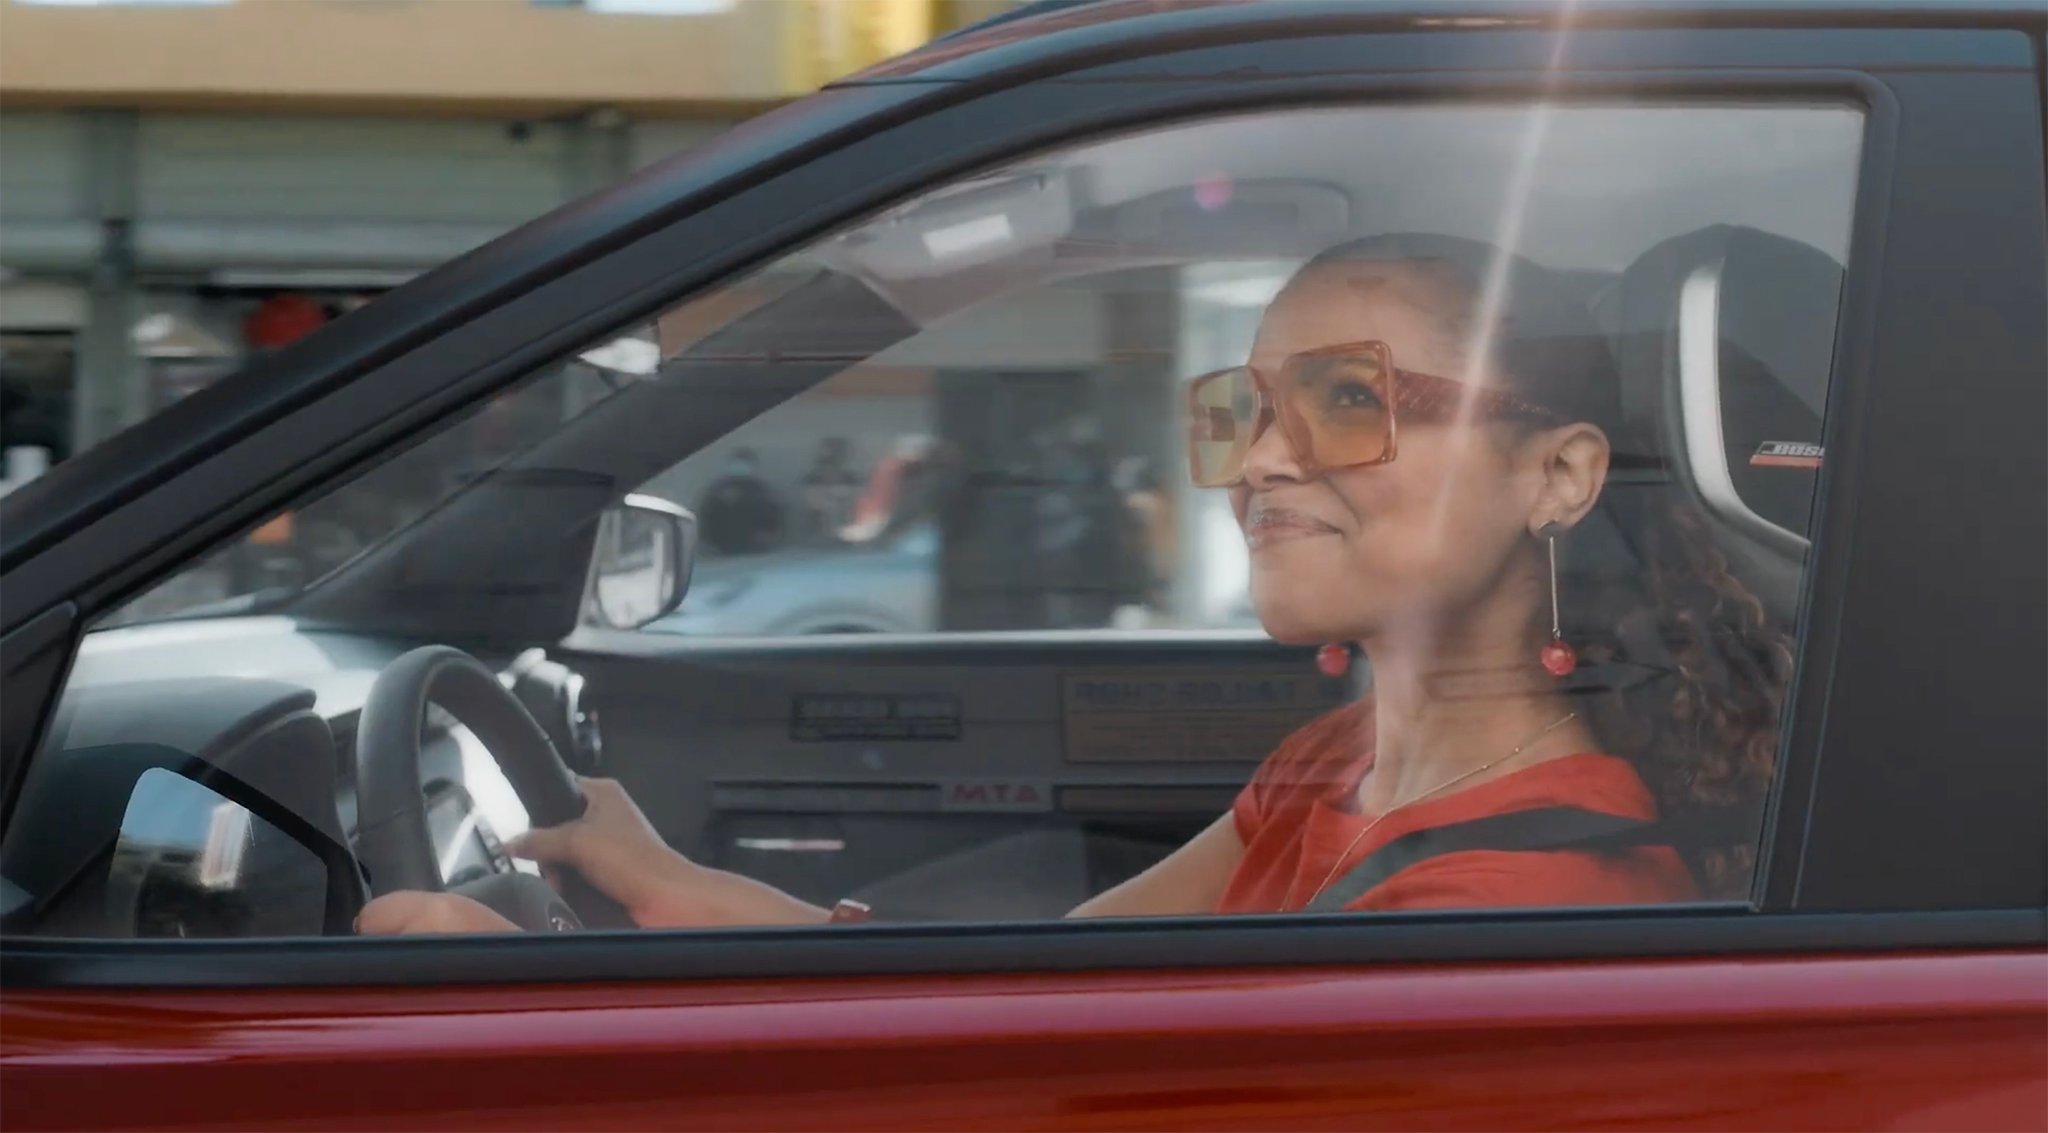 Dominican actress Sonalii Castillo stars in the 2021 Nissan KICKS commercial